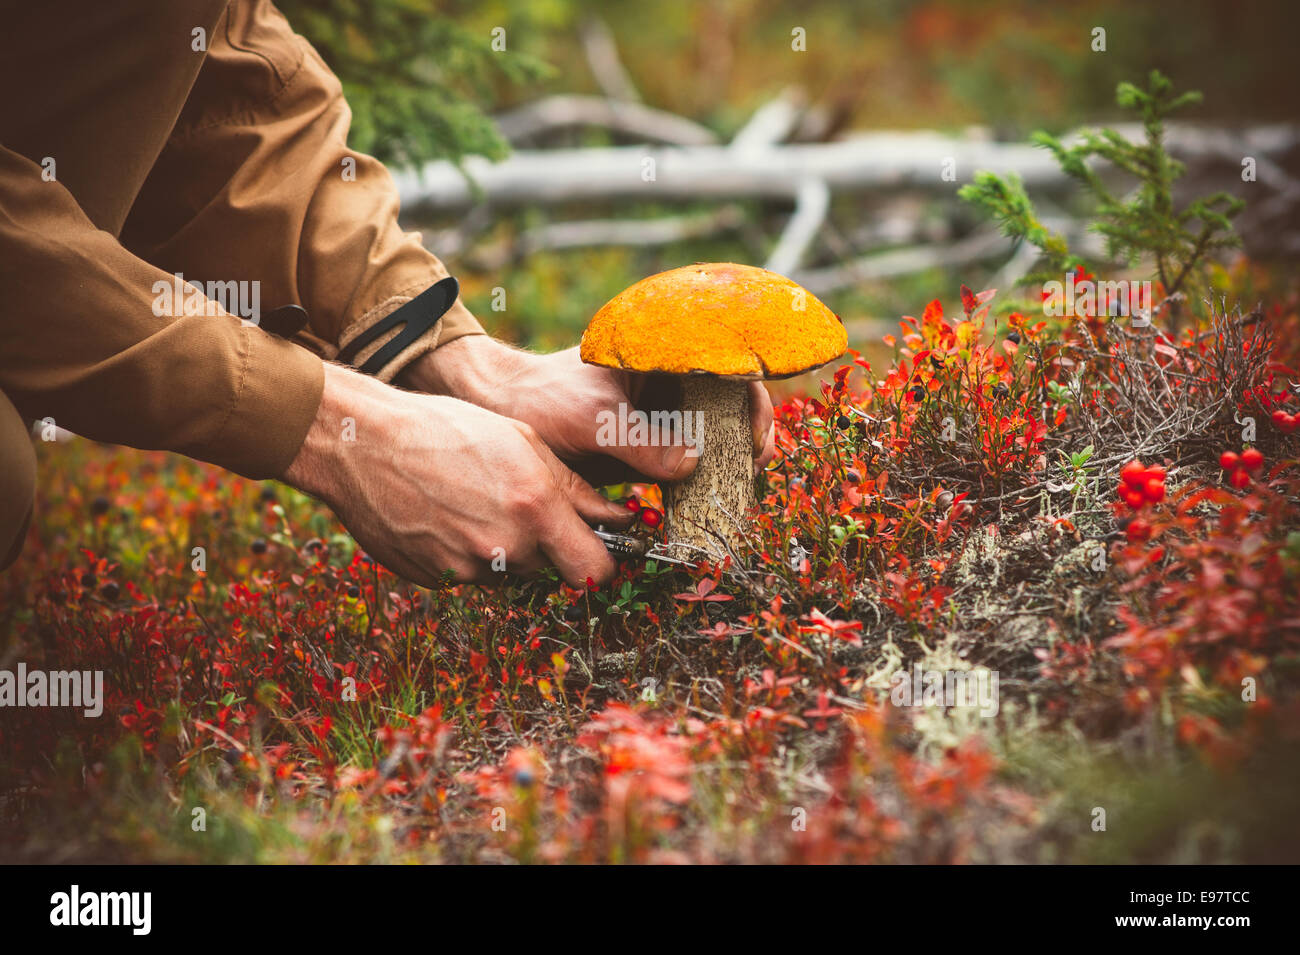 Man hands picking Mushroom orange cap boletus fresh organic food healthy lifestyle forest nature on background Stock Photo